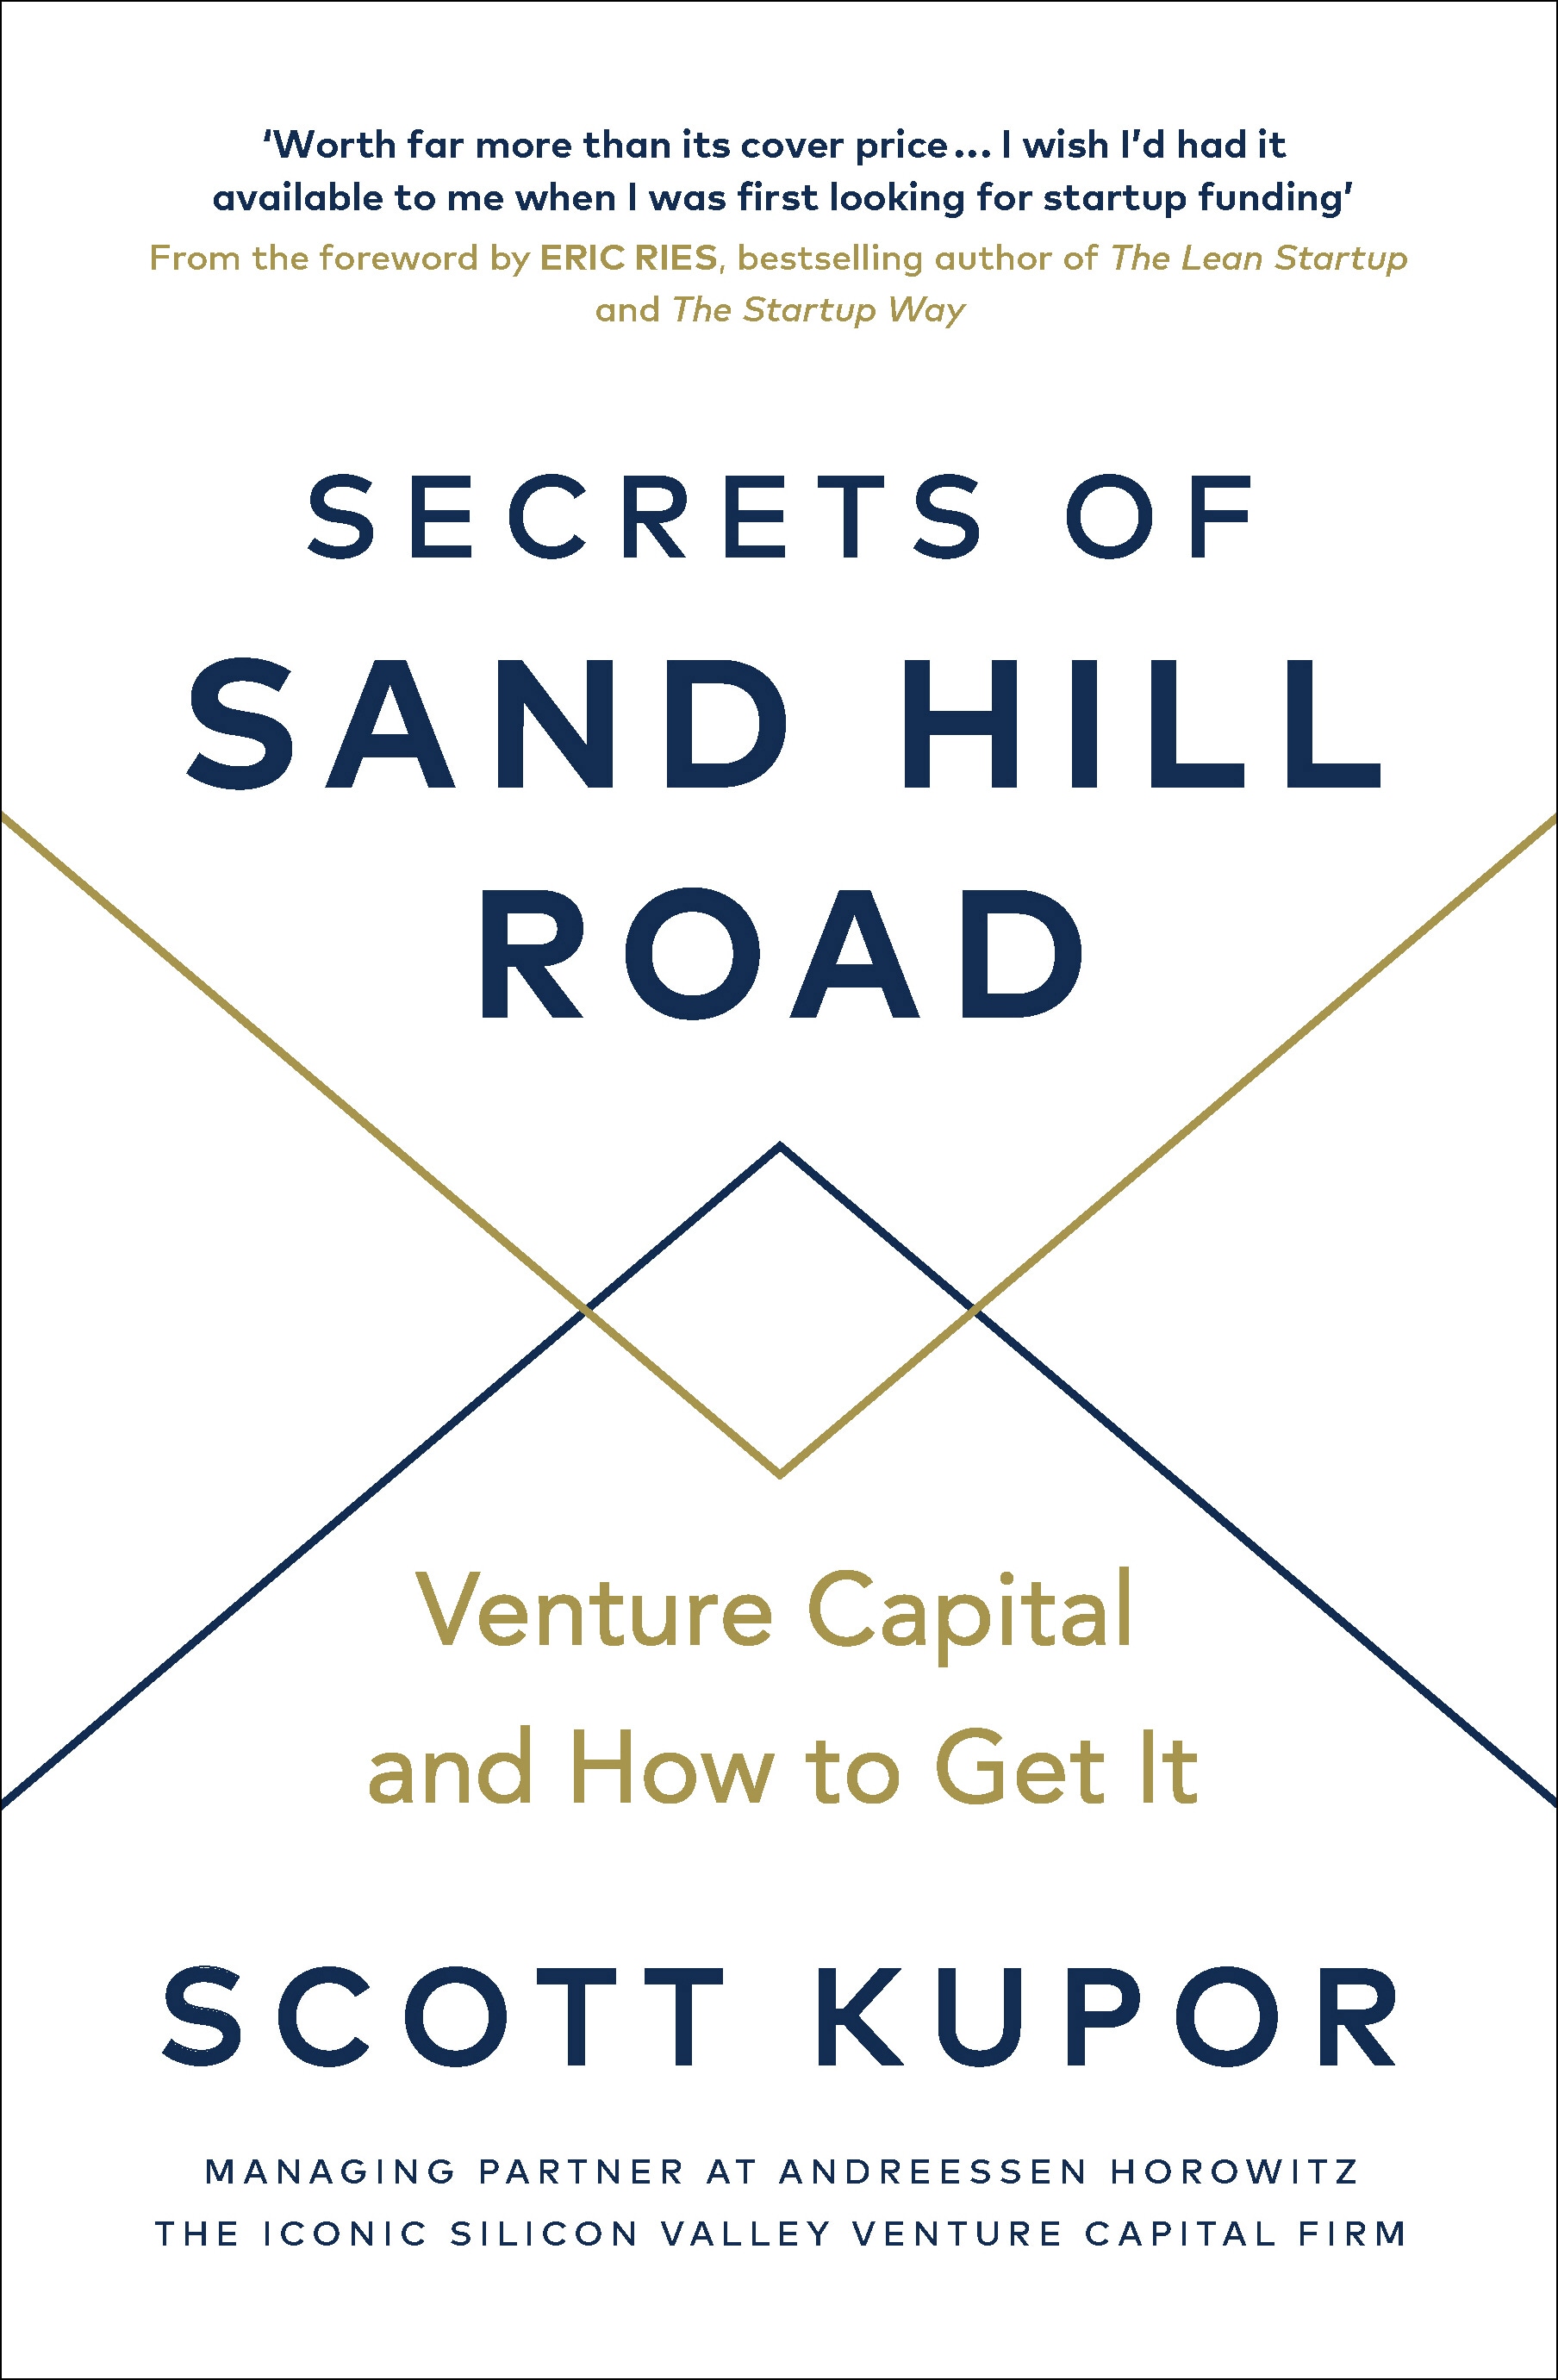 Book “Secrets of Sand Hill Road” by Scott Kupor — June 6, 2019